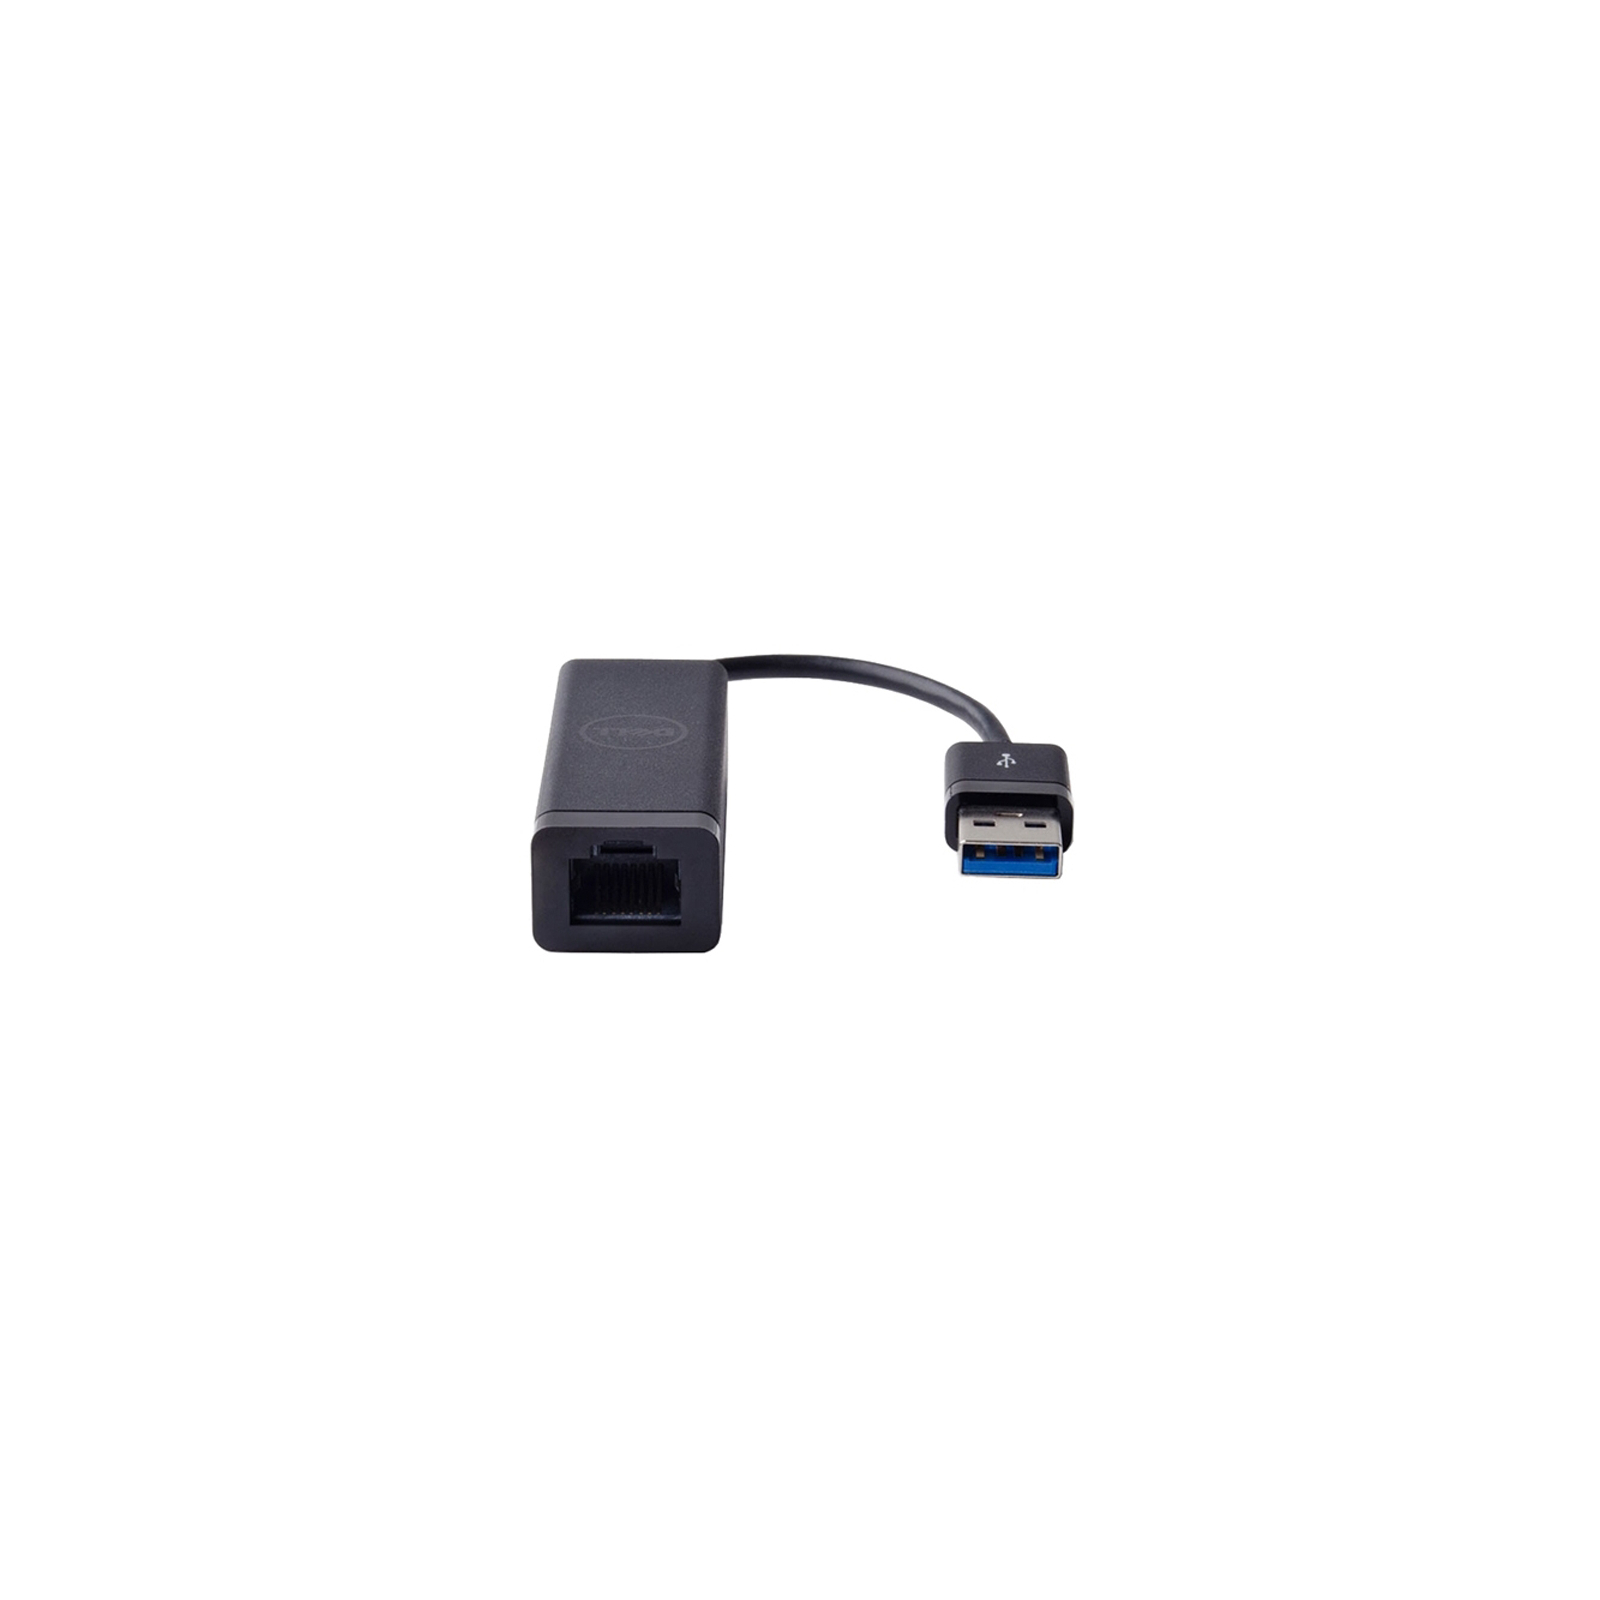 Перехідник USB to Ethernet Dell (470-ABBT)